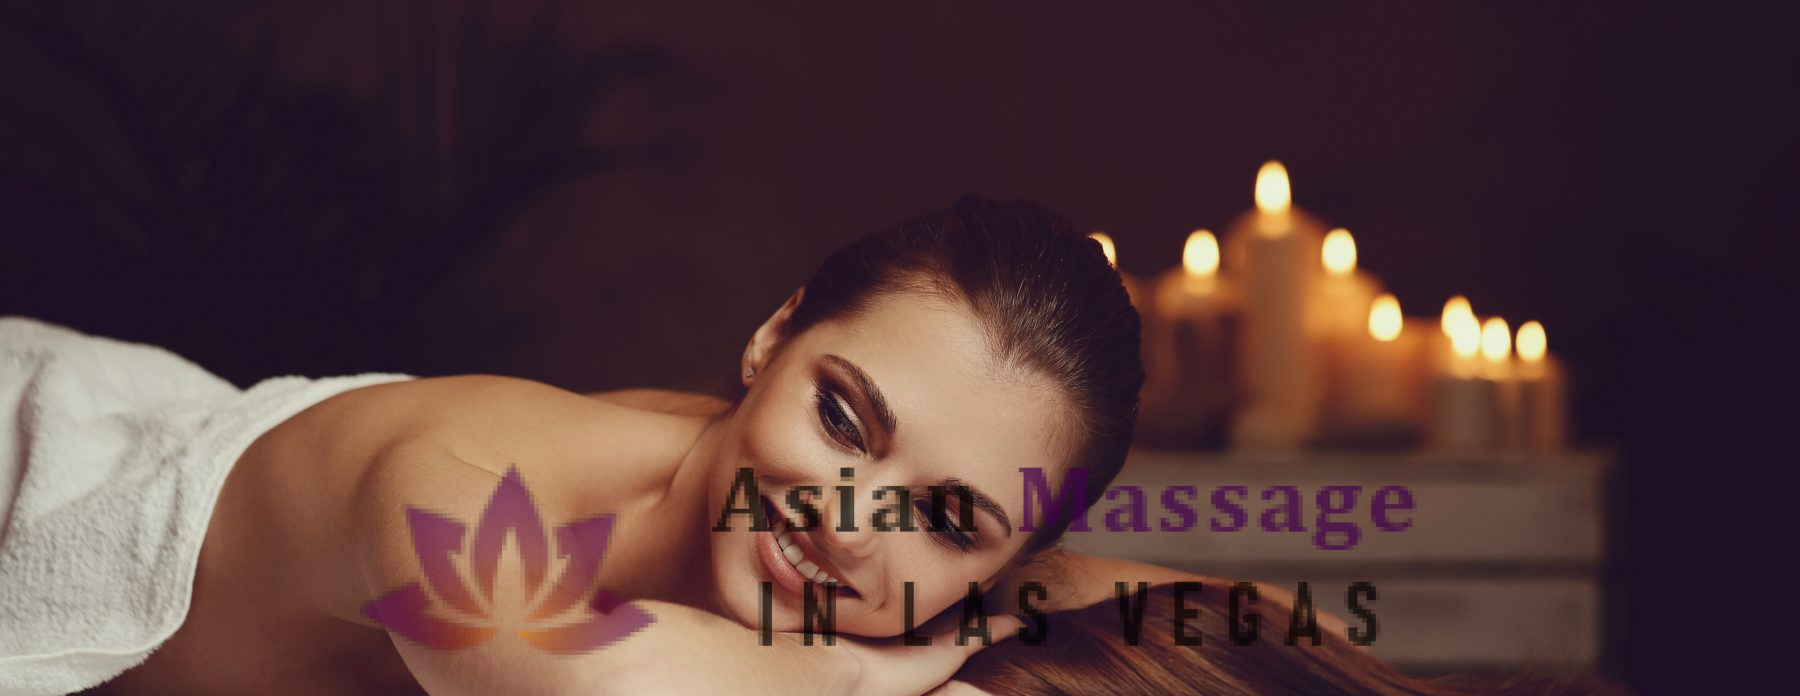 Outcall Massage Las Vegas - Asian Massage In Las Vegas